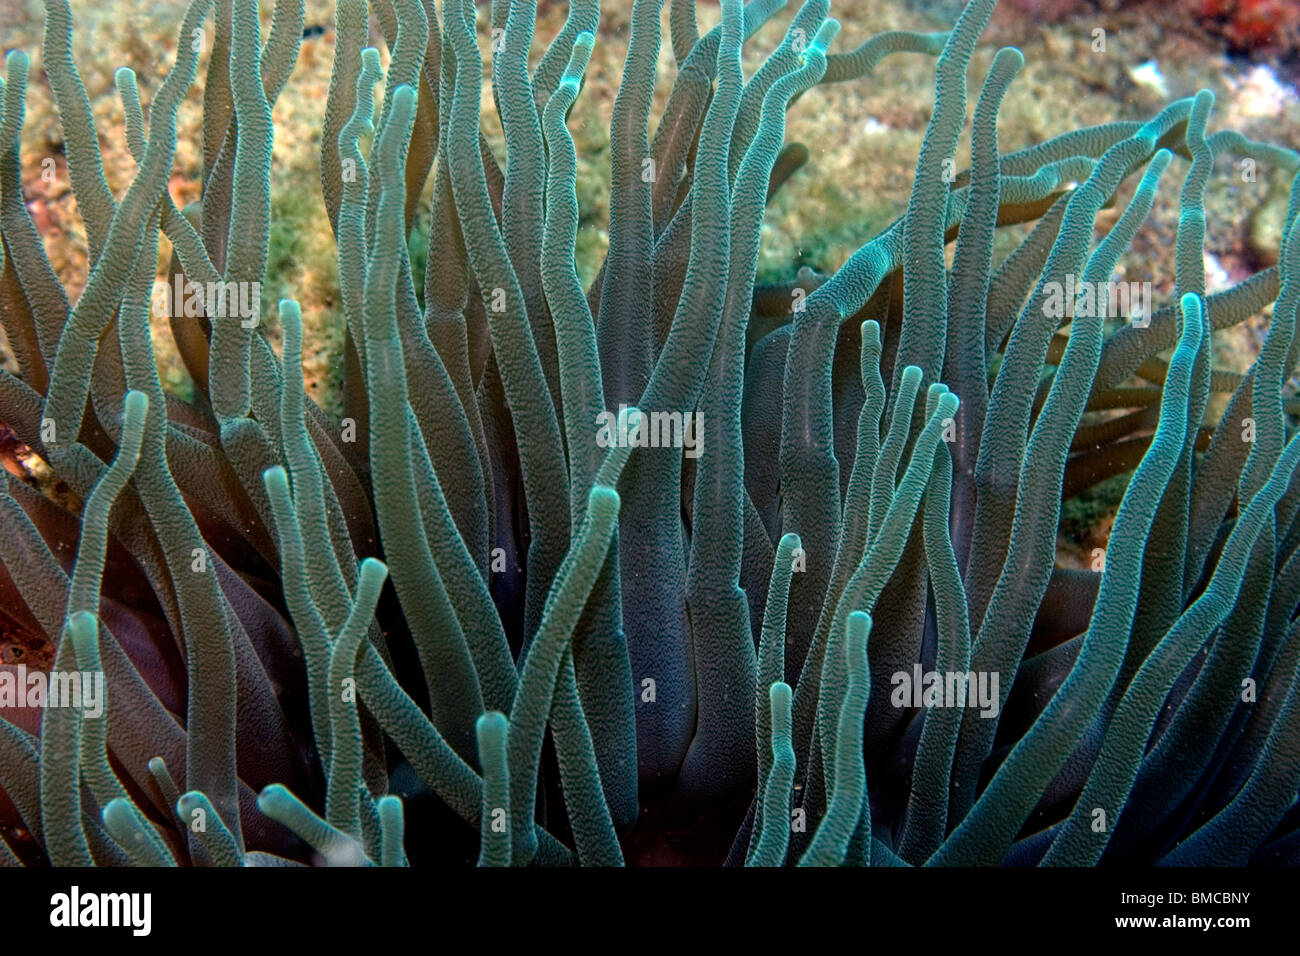 Sfera anemone, Condylactis gigantea, Ilha Escalvada, Guarapari, Espirito Santo, Brasile Foto Stock